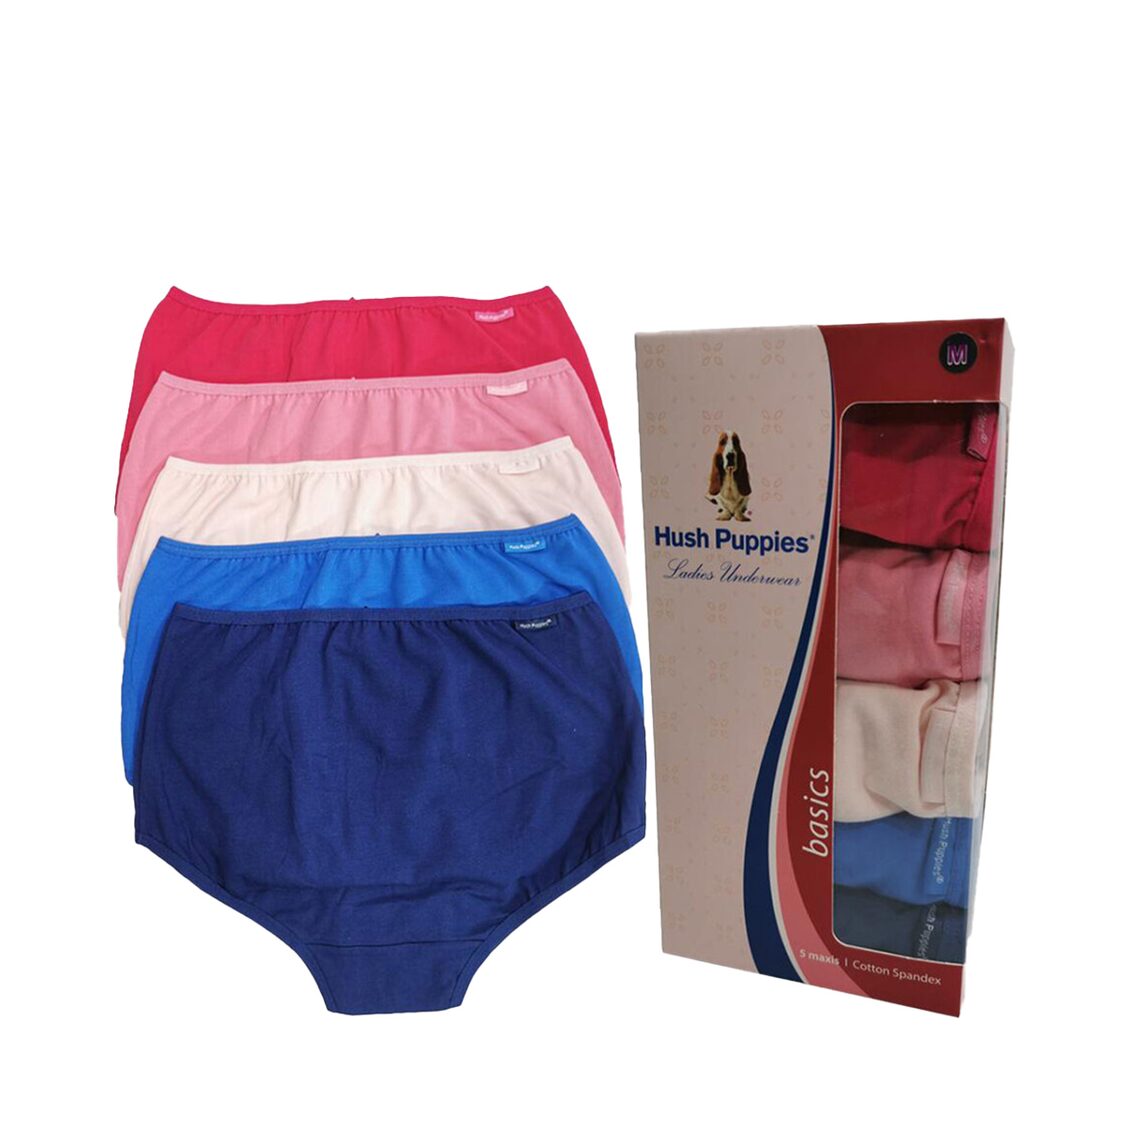 Jockey® 5pcs Ladies' Panties, Cotton Spandex, Essential, Hipster